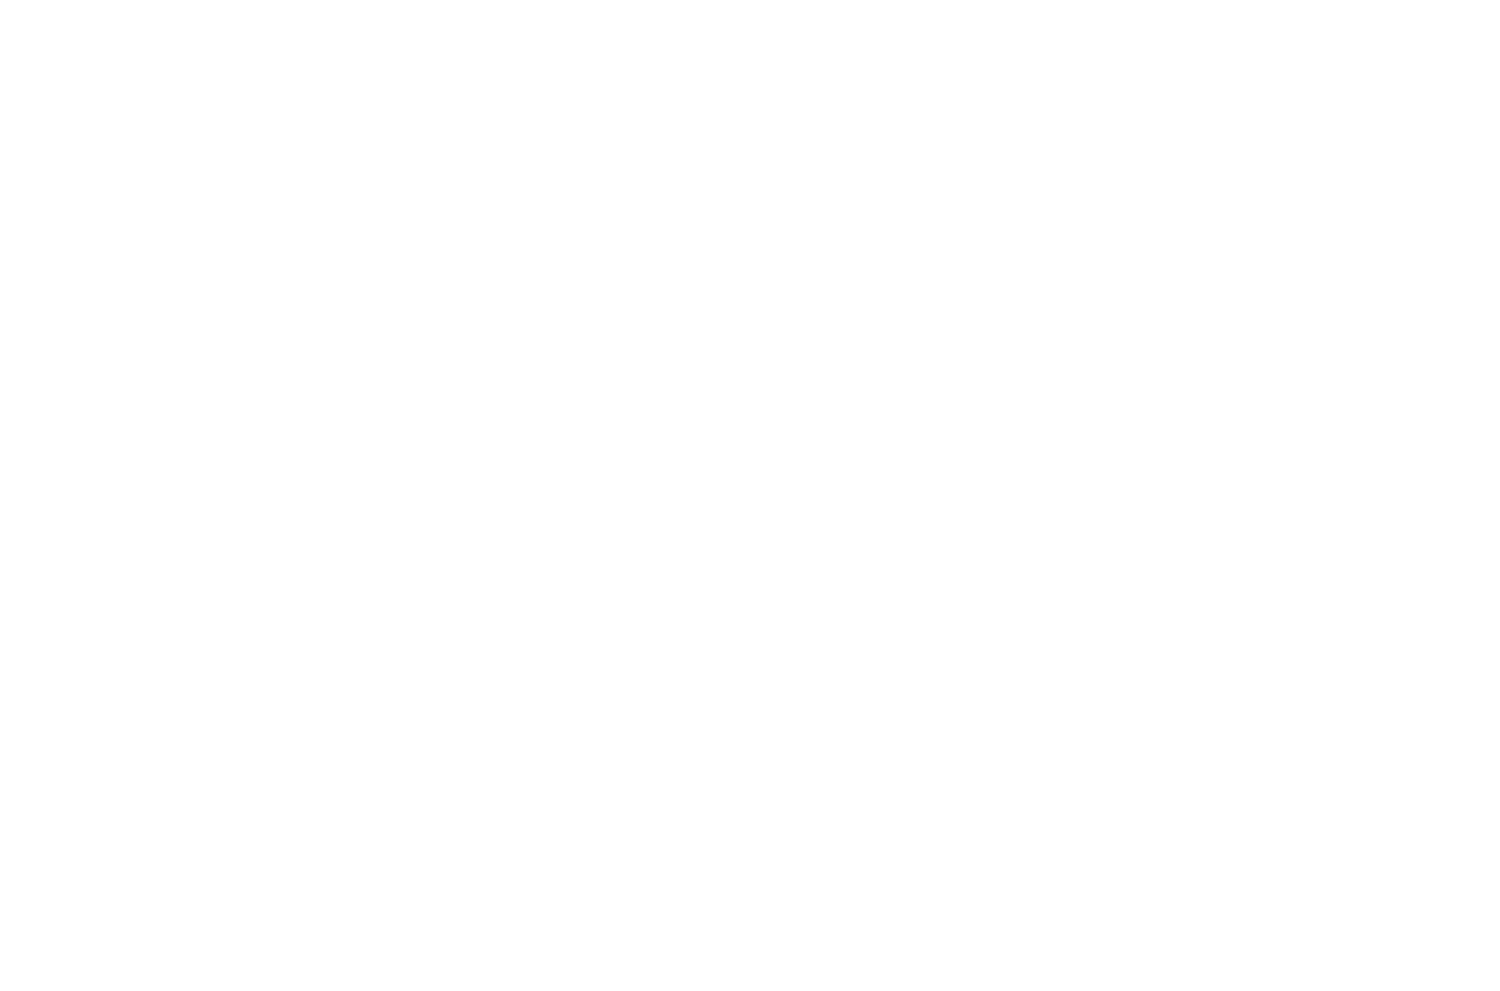 Poke The Bear